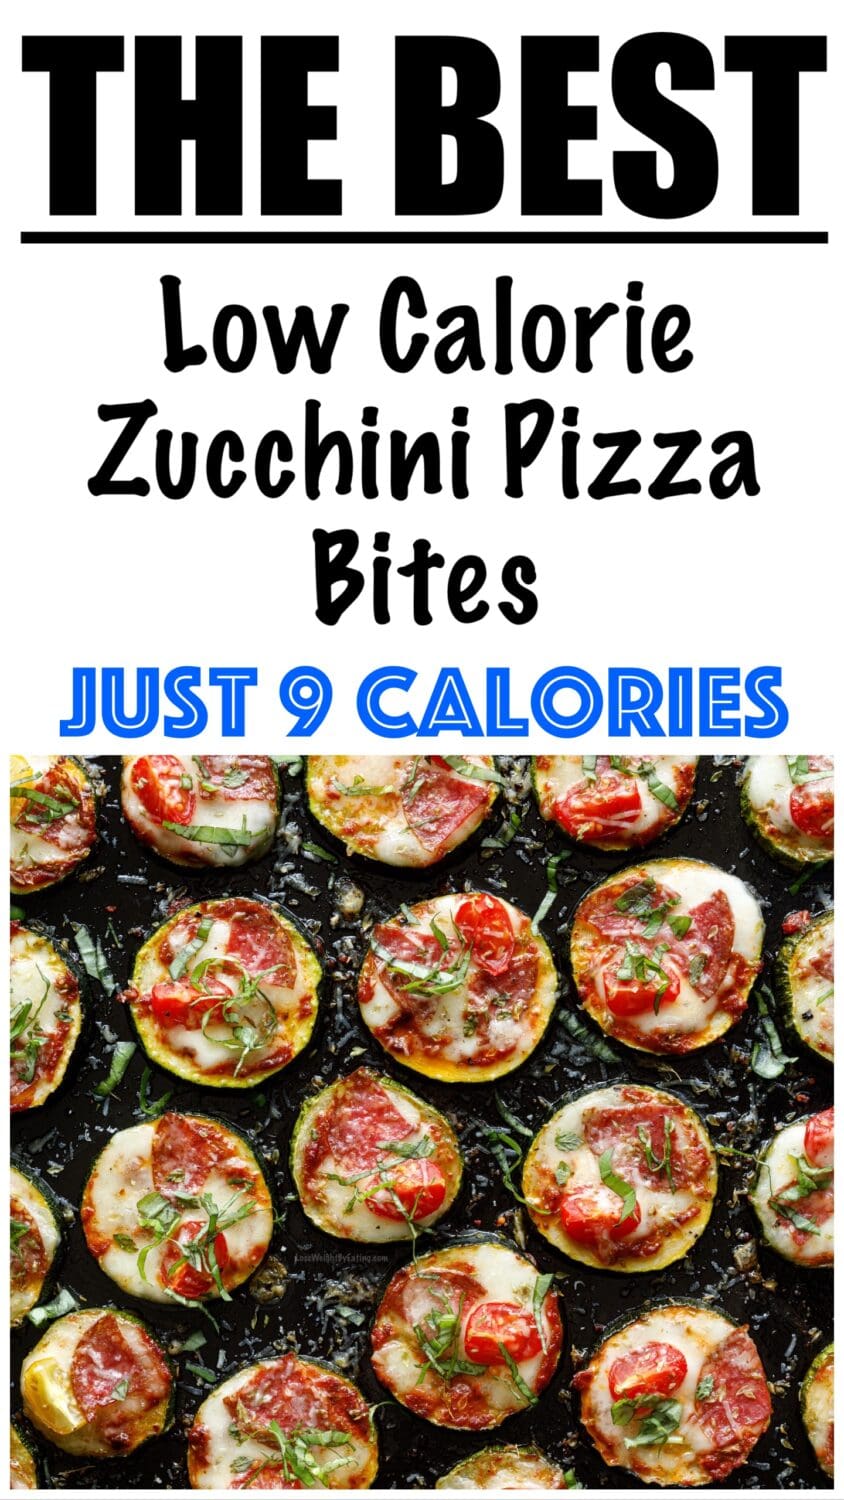 Low Calorie Zucchini Pizza Bites